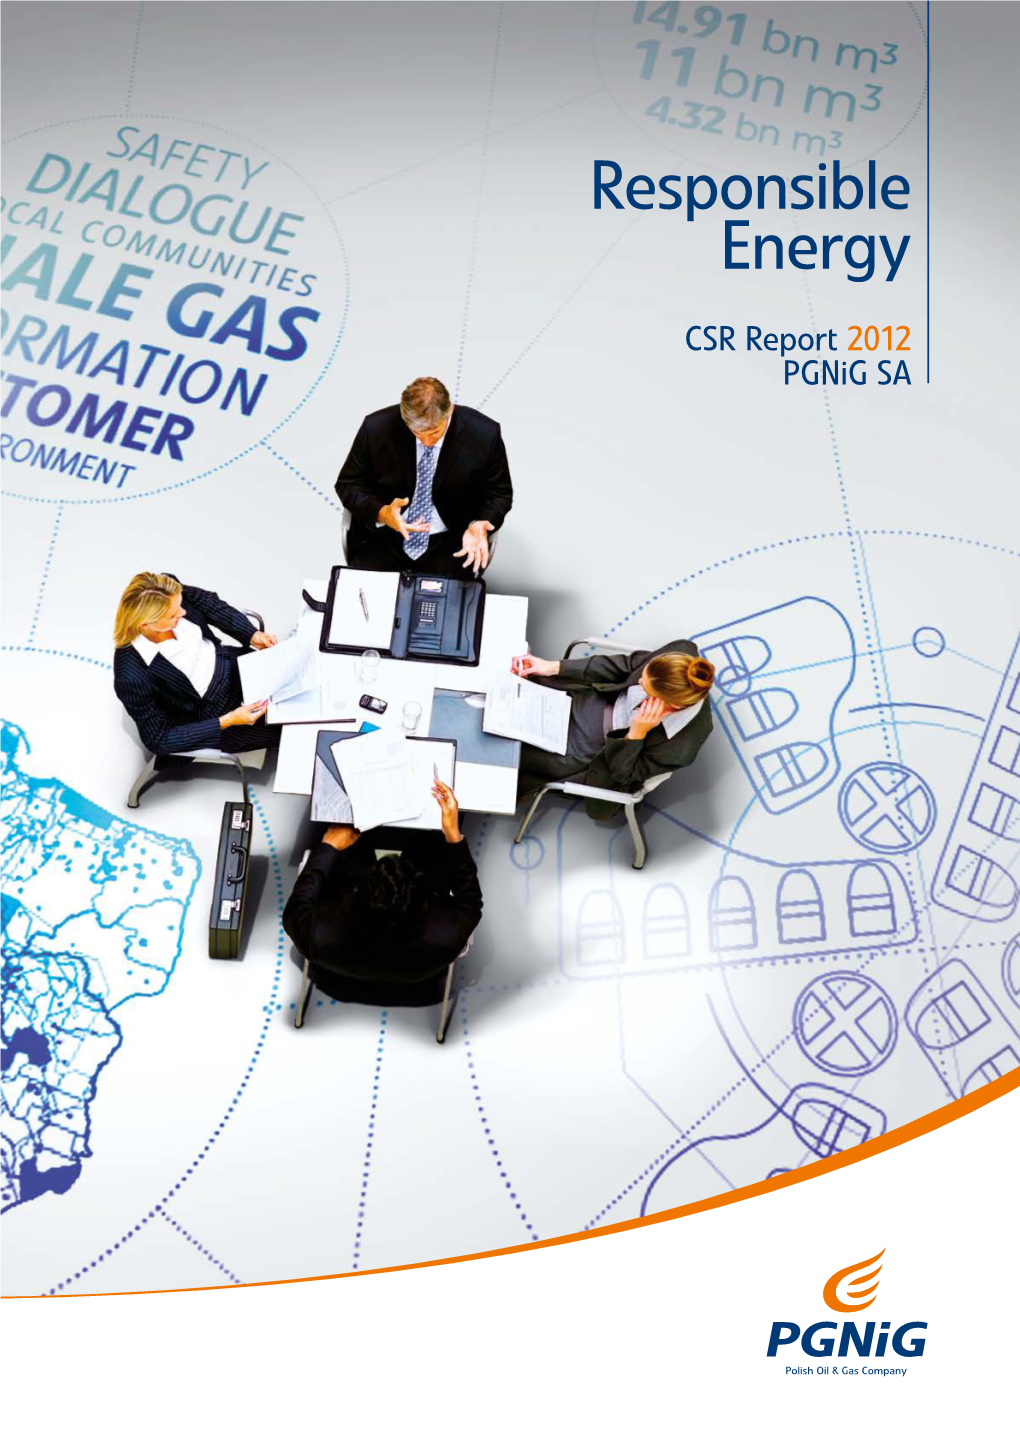 Responsible Energy. CSR Report 2012 Pgnig SA